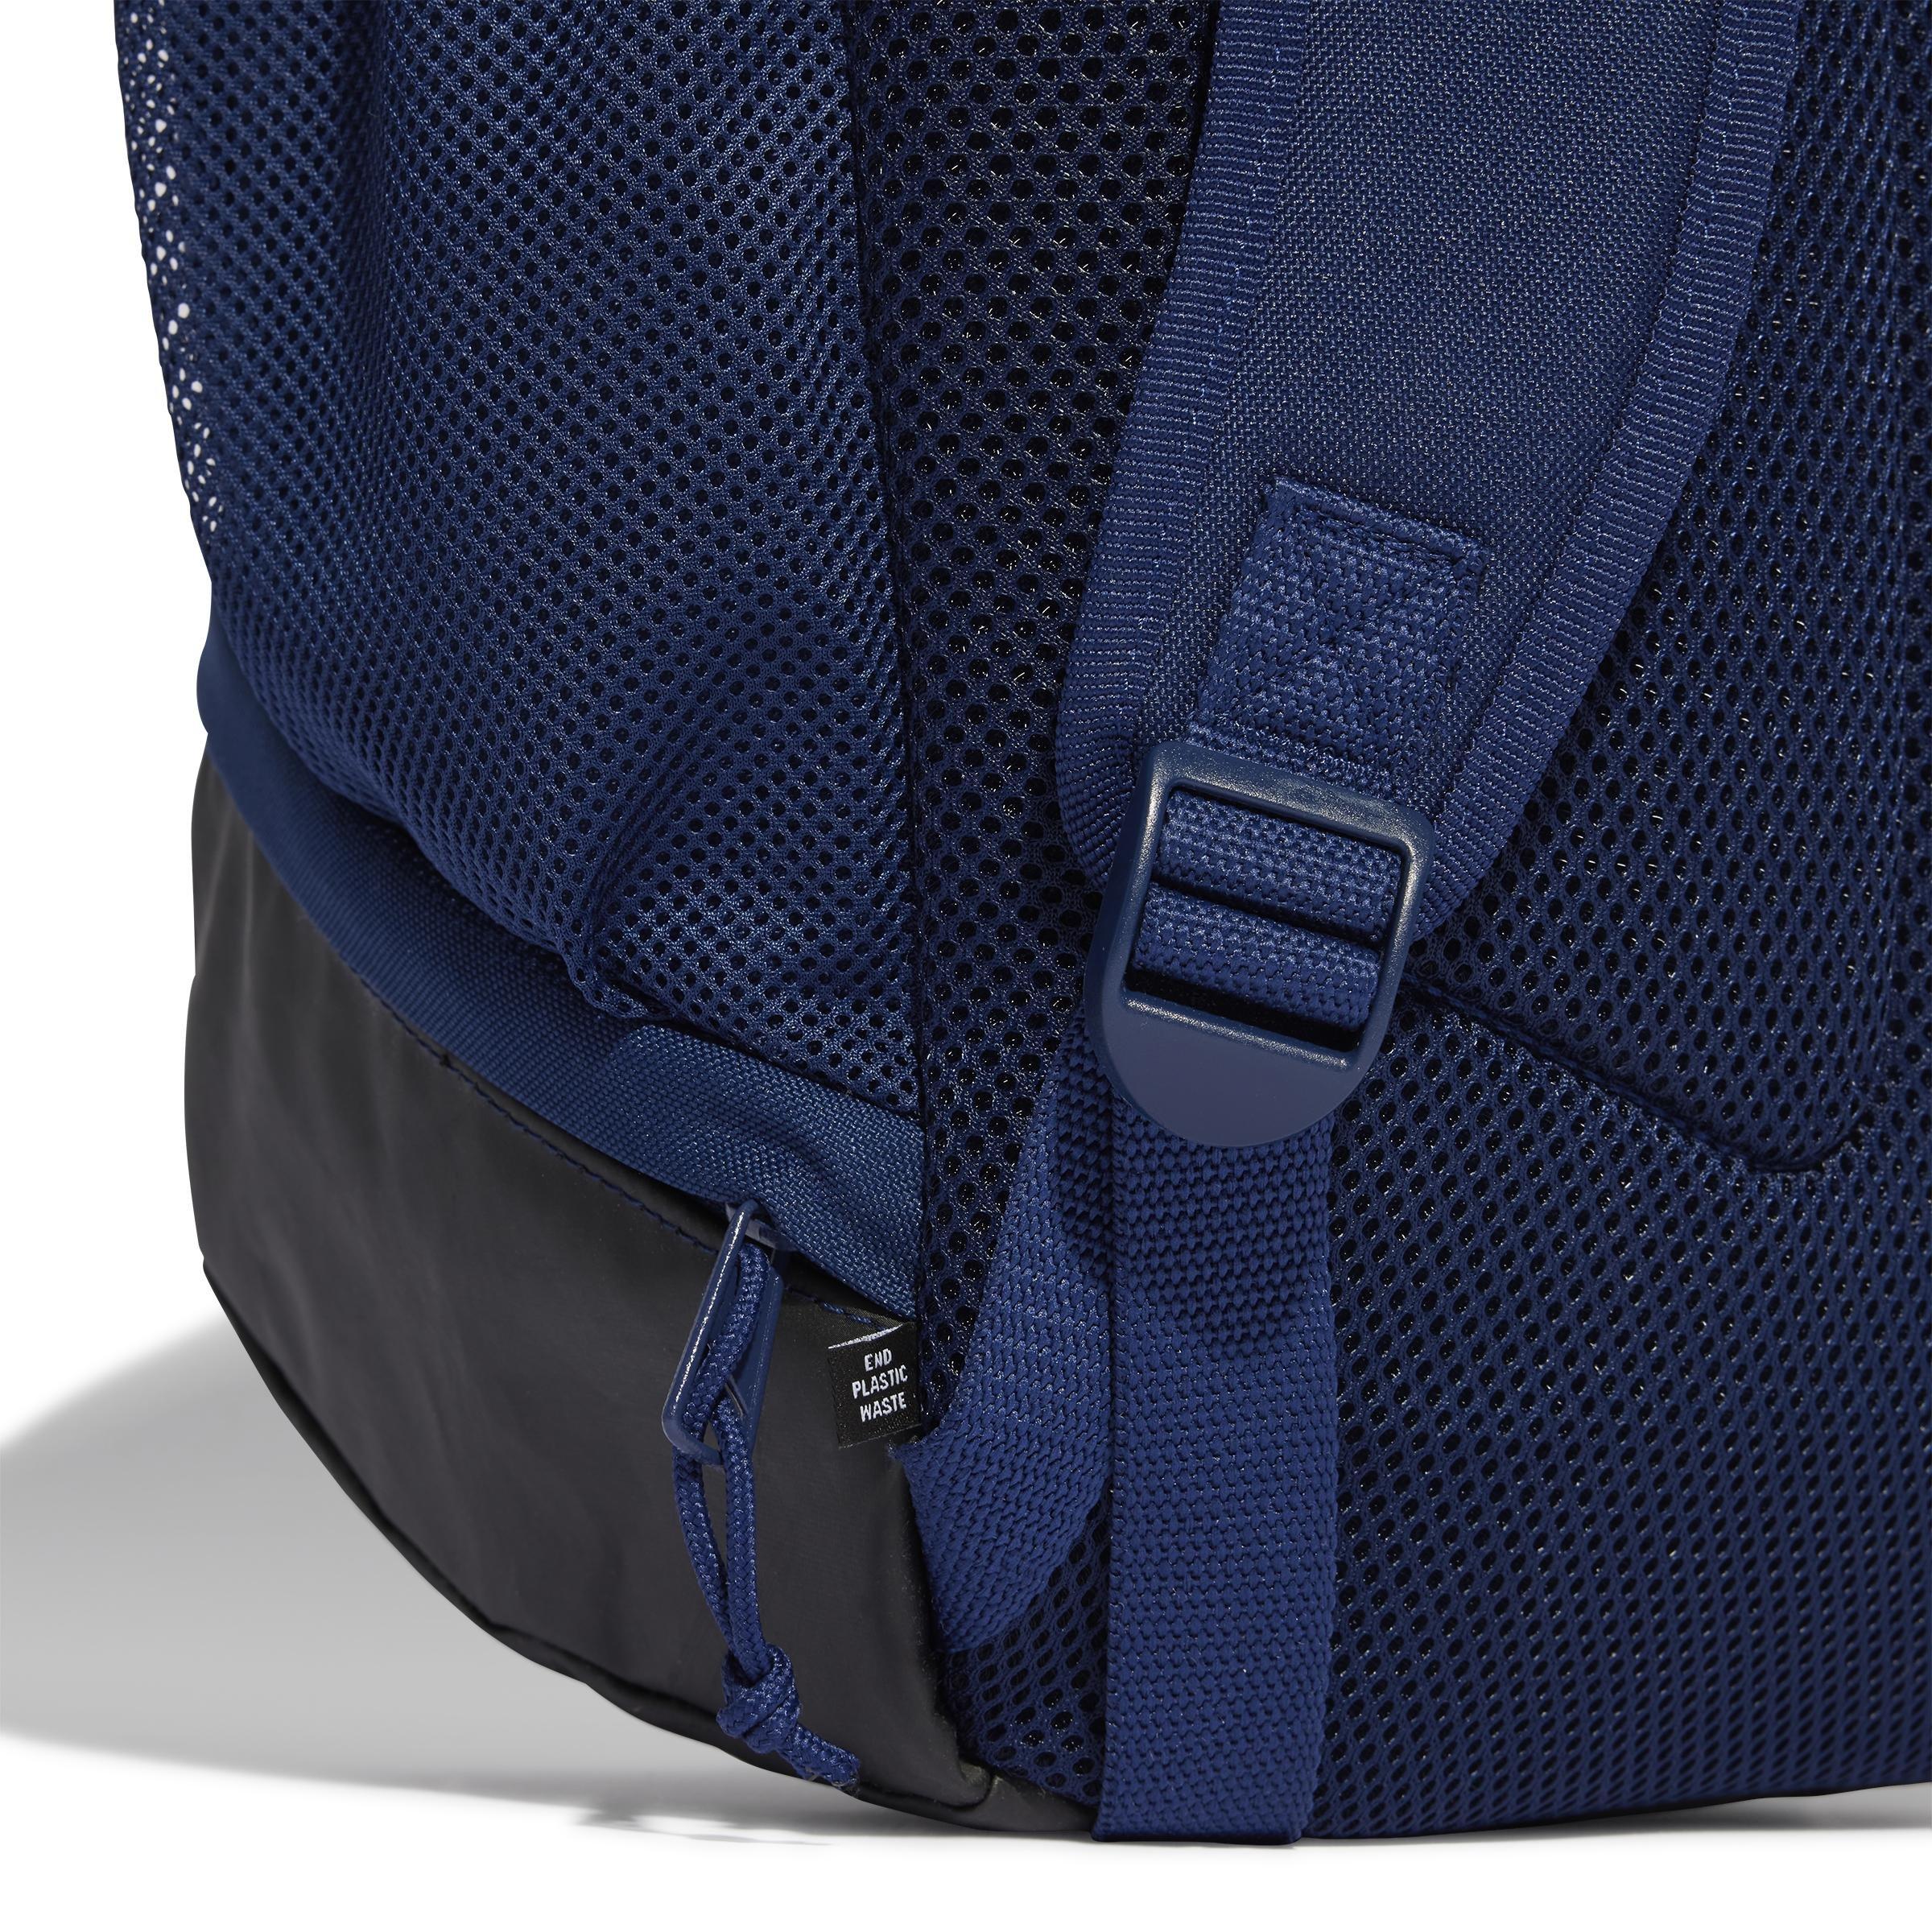 adidas - Unisex Tiro 23 League Backpack, Blue